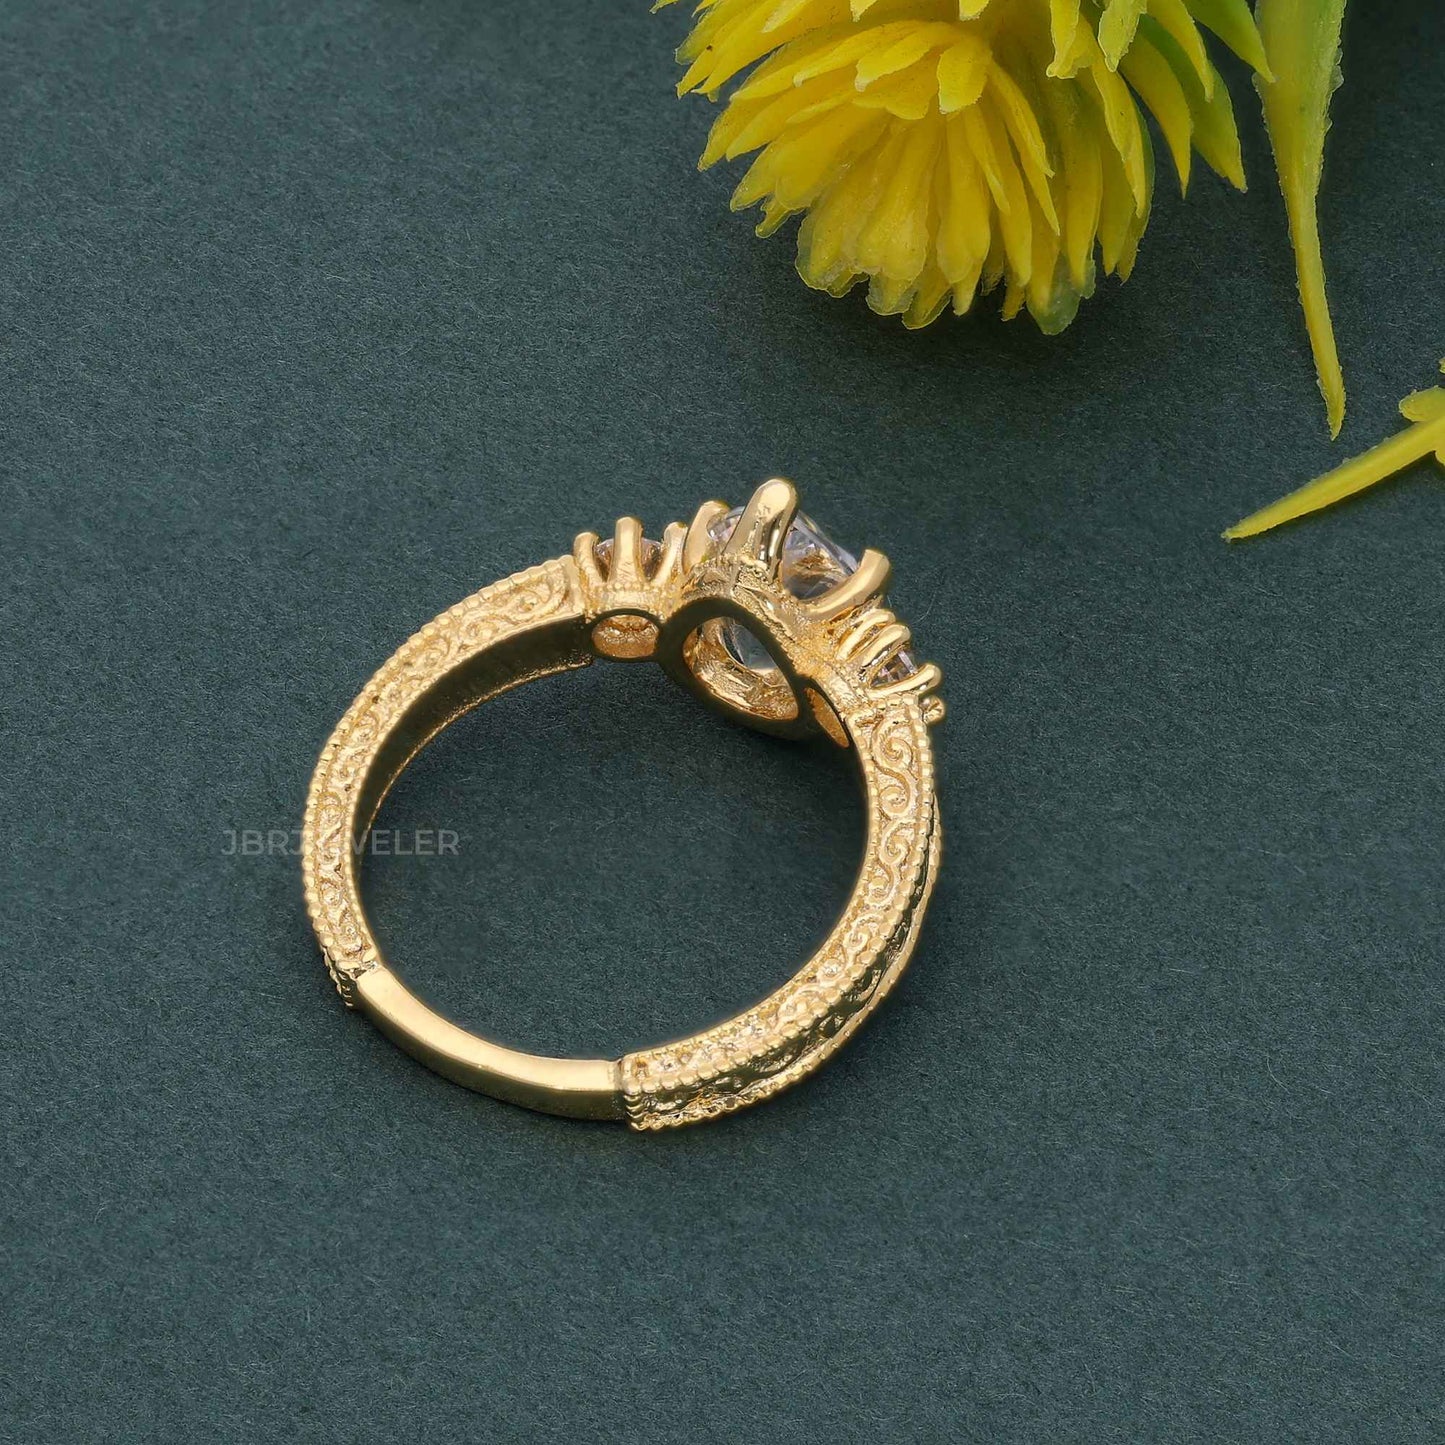 Vintage Three Stone Pear Moissanite Diamond Engagement Ring